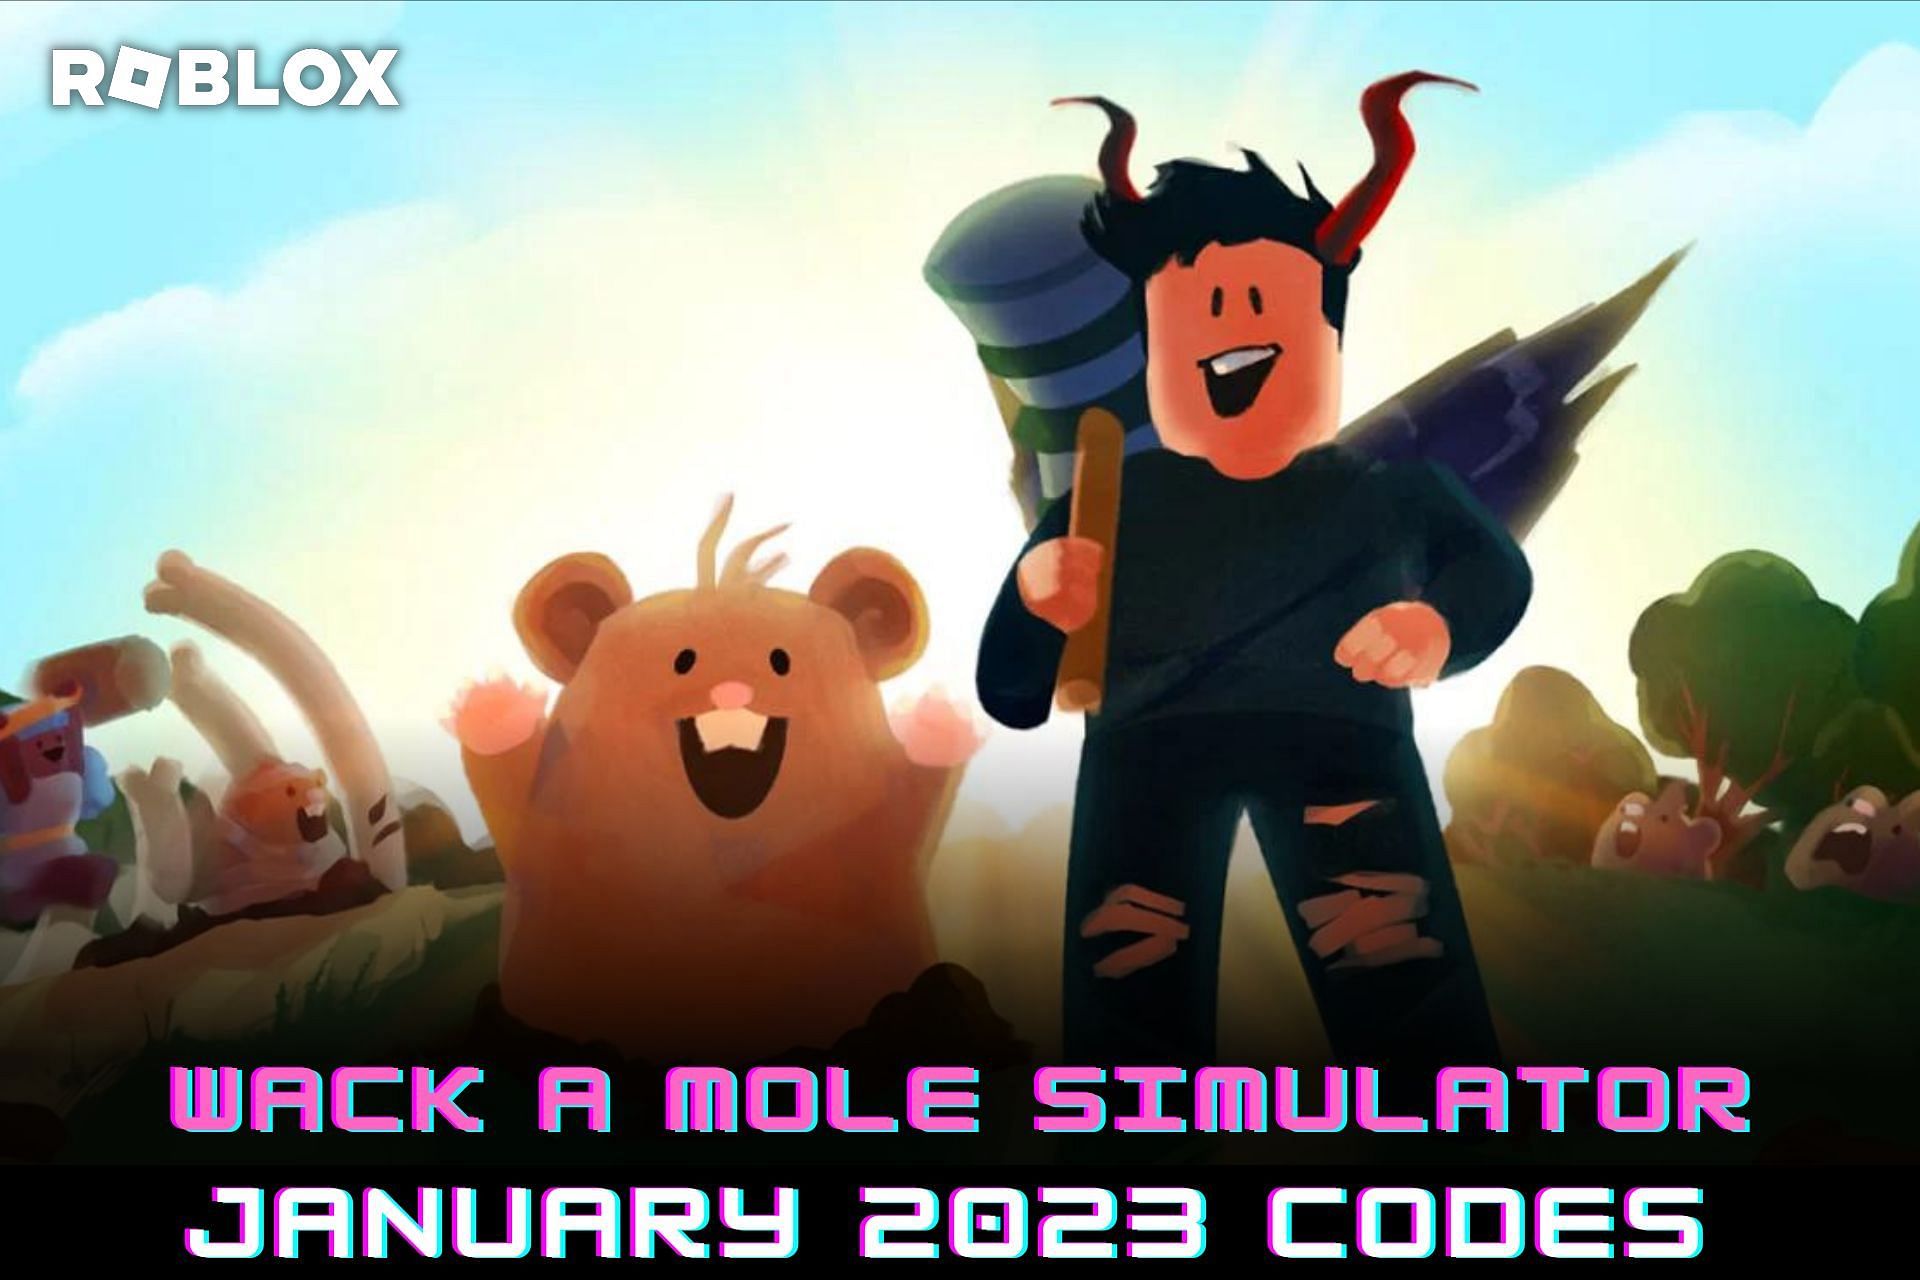 Roblox Wack A Mole Simulator Codes For January 2023 Free Gems